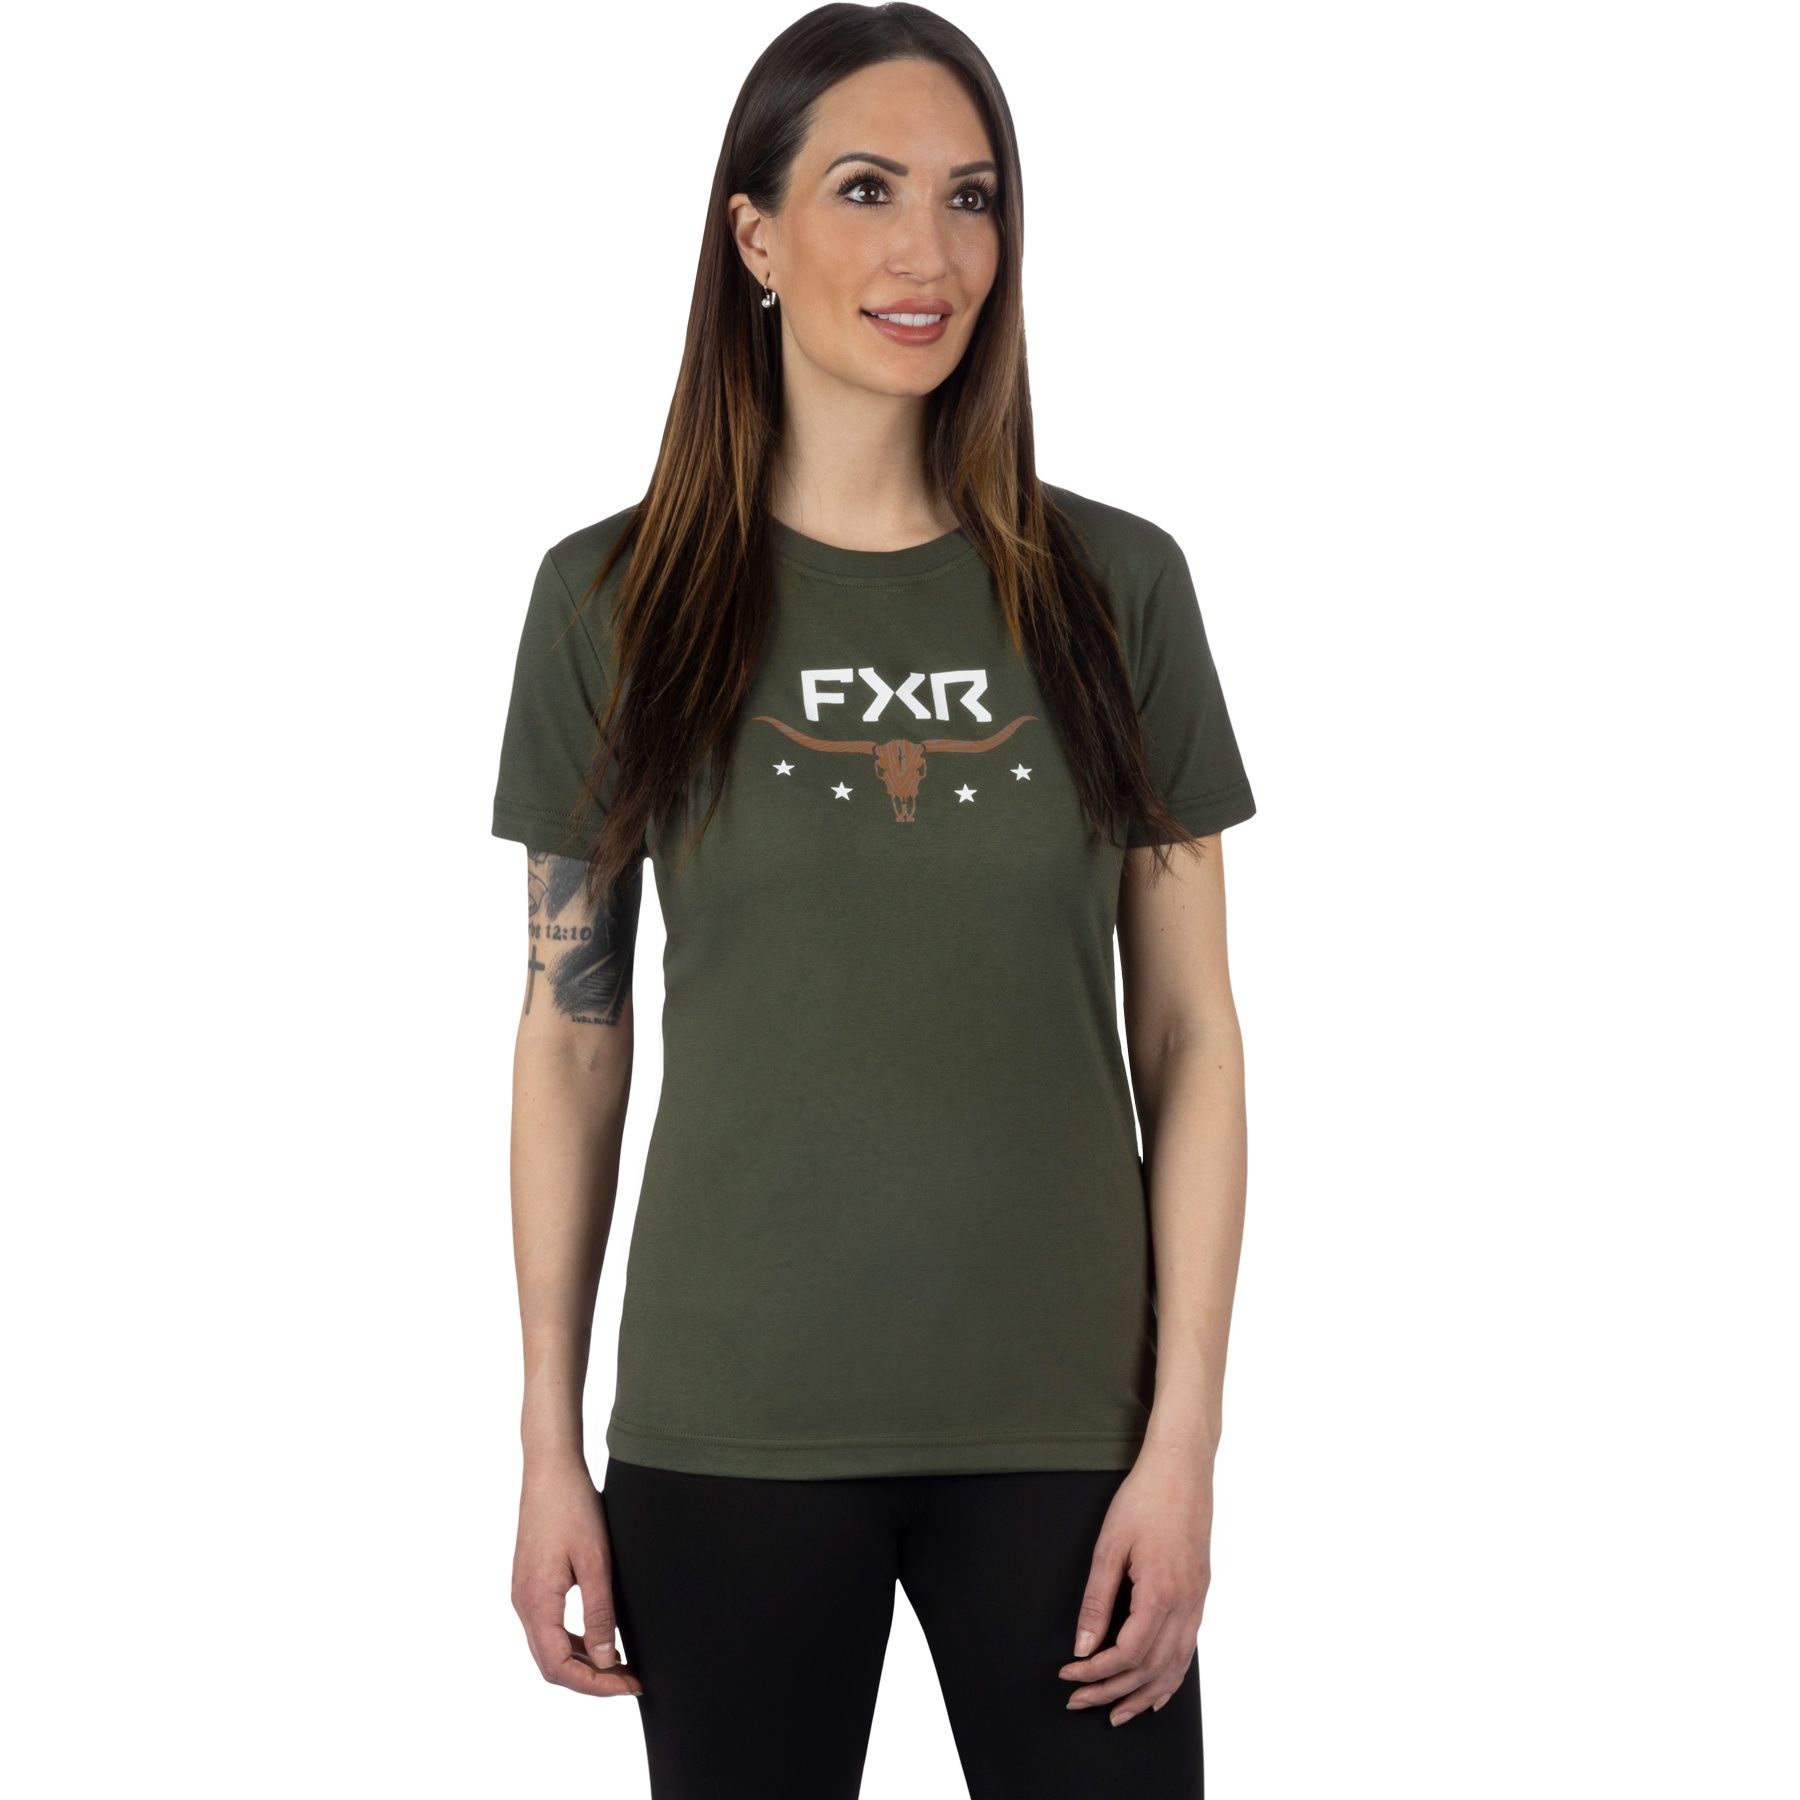 fxr racing t-shirt shirts for womens antler premium